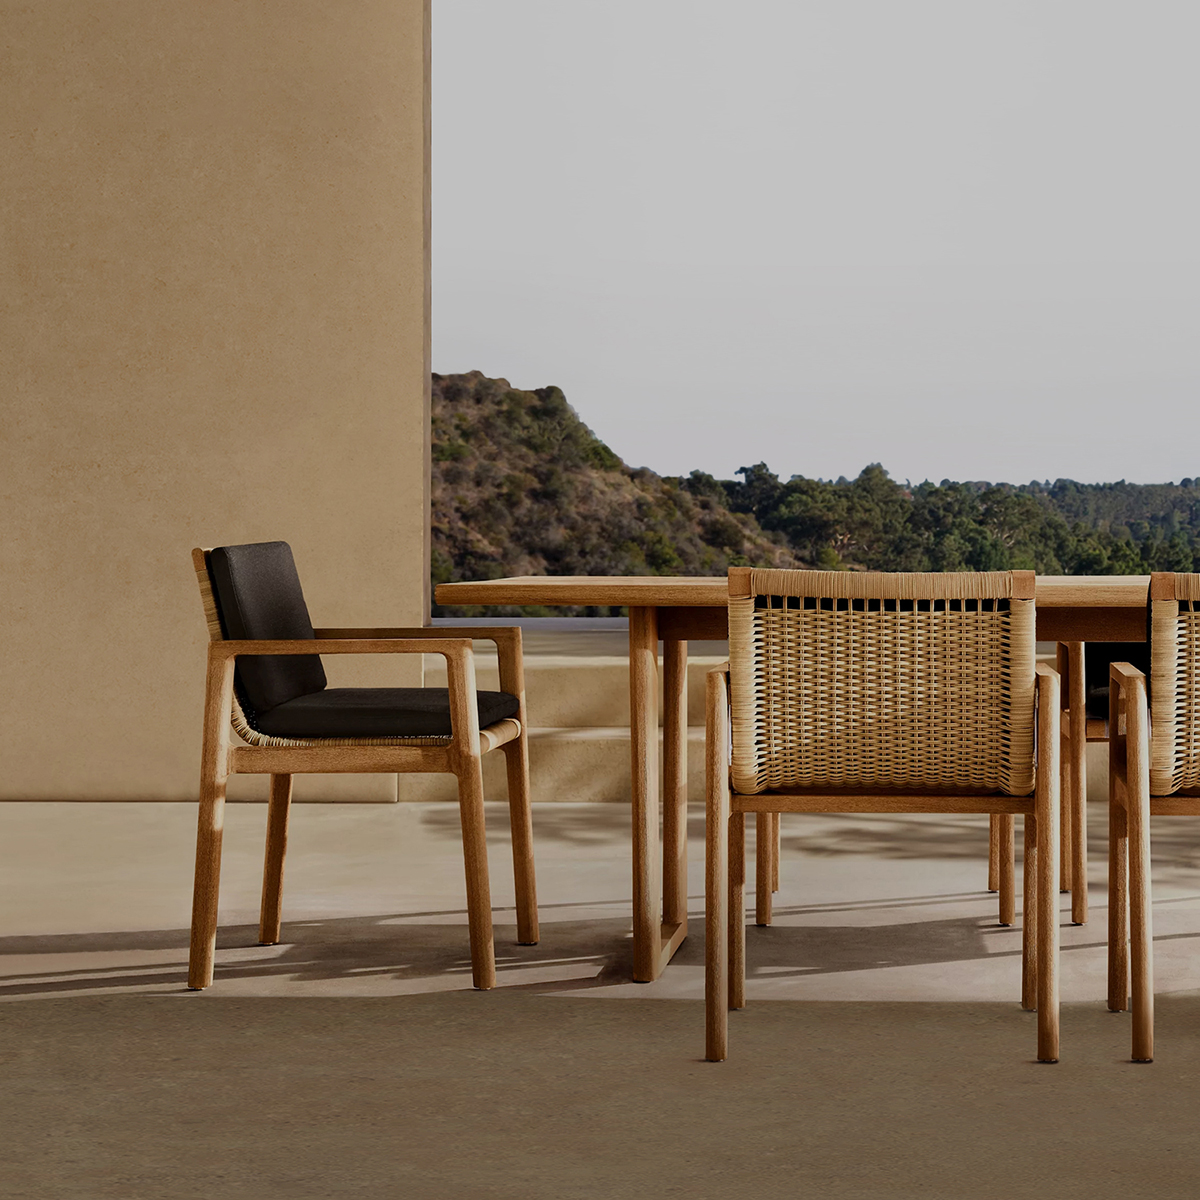 Mesa outdoor collection dining set by Mario Ruiz for RH